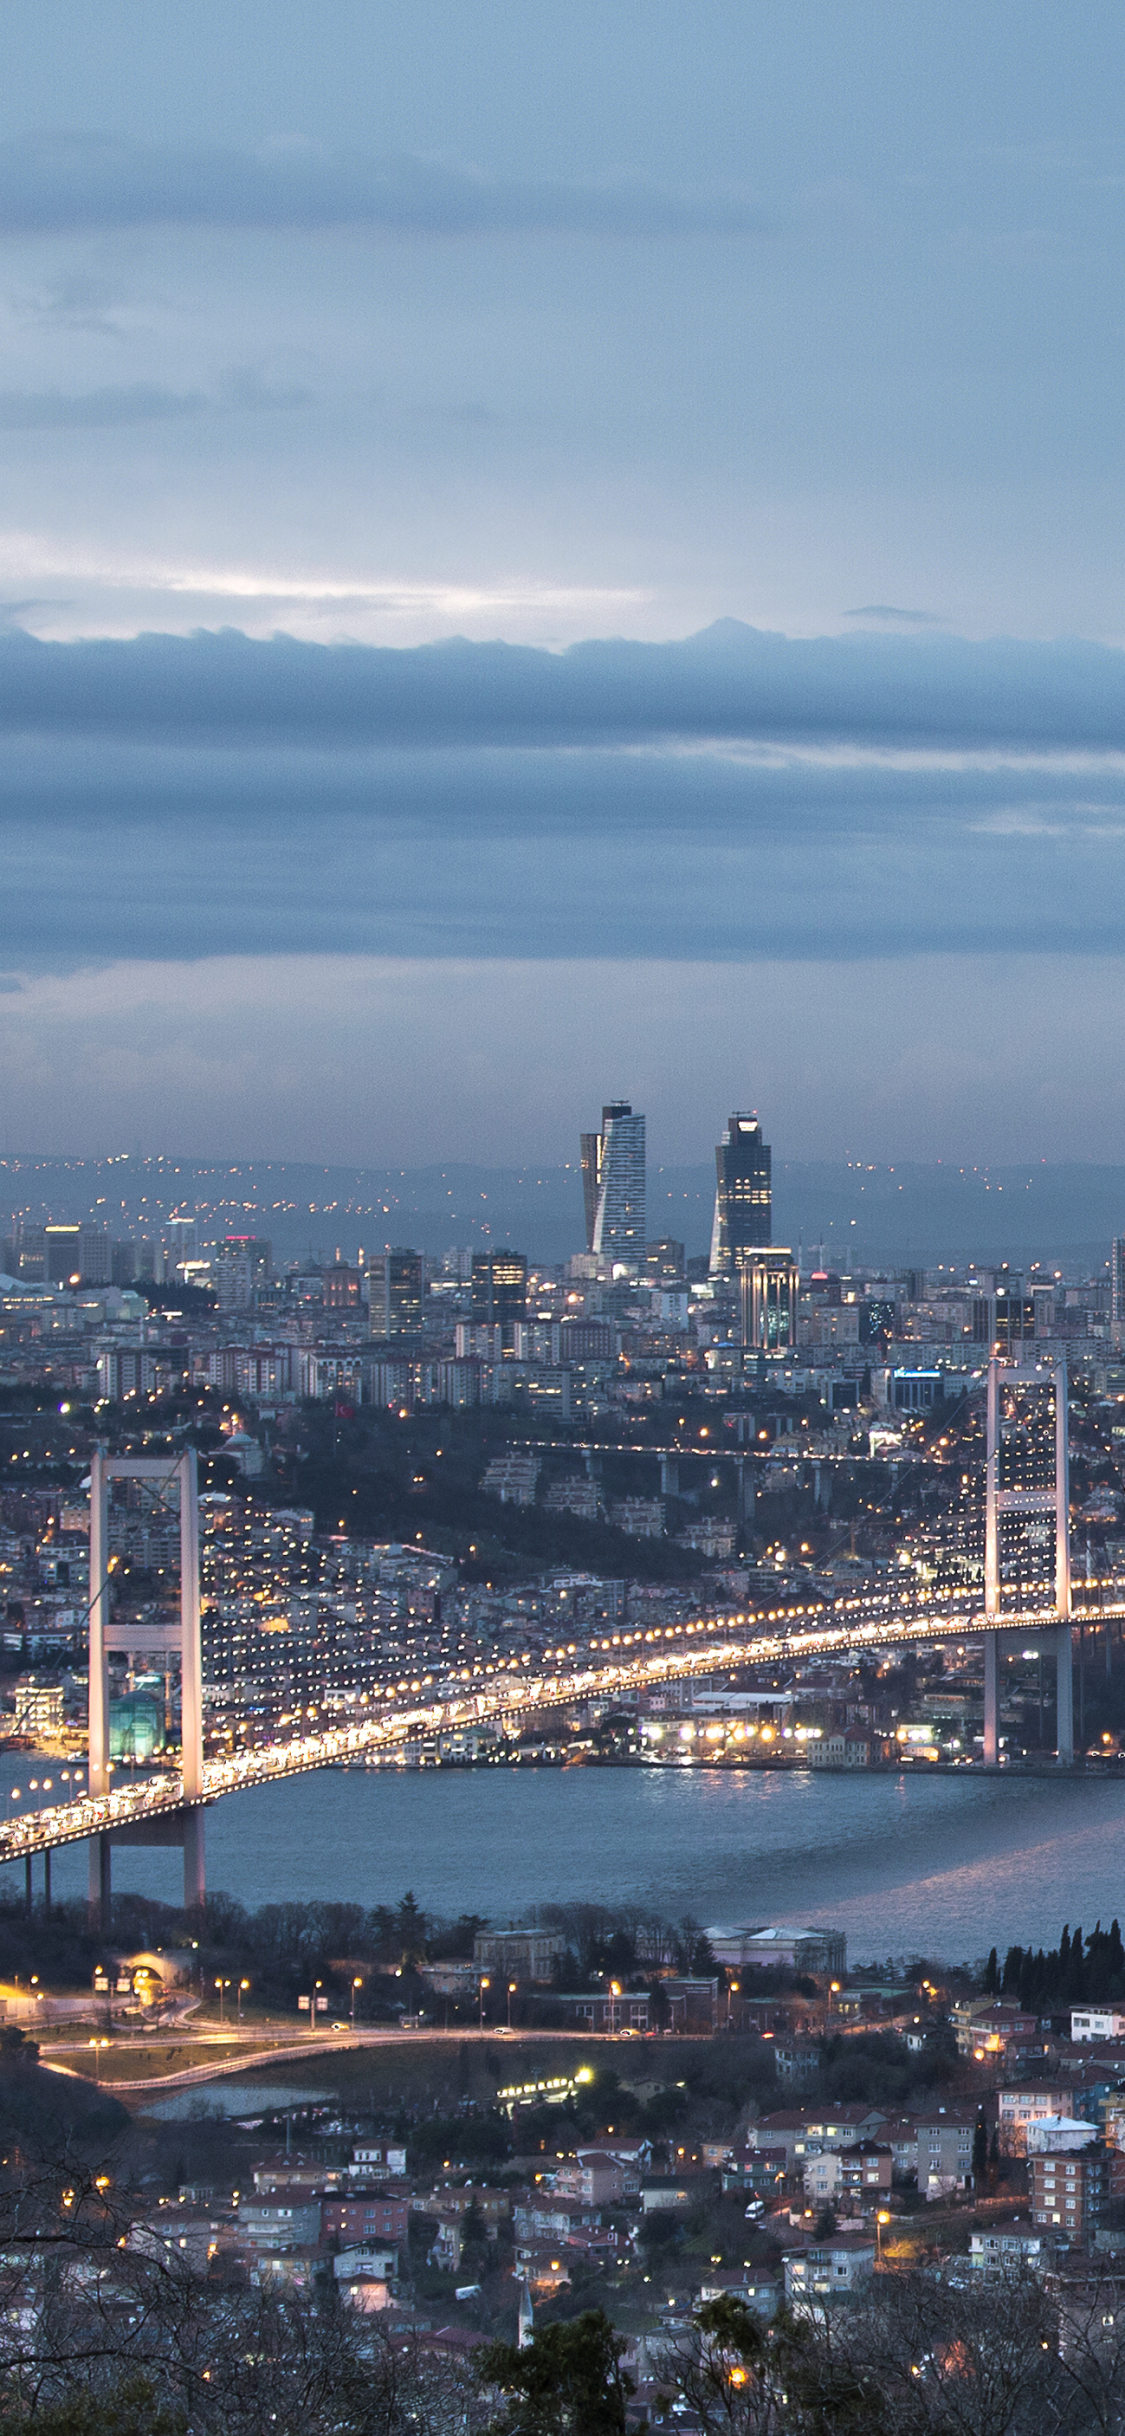 Bosphorus and bridge at night by ihsan Gercelman